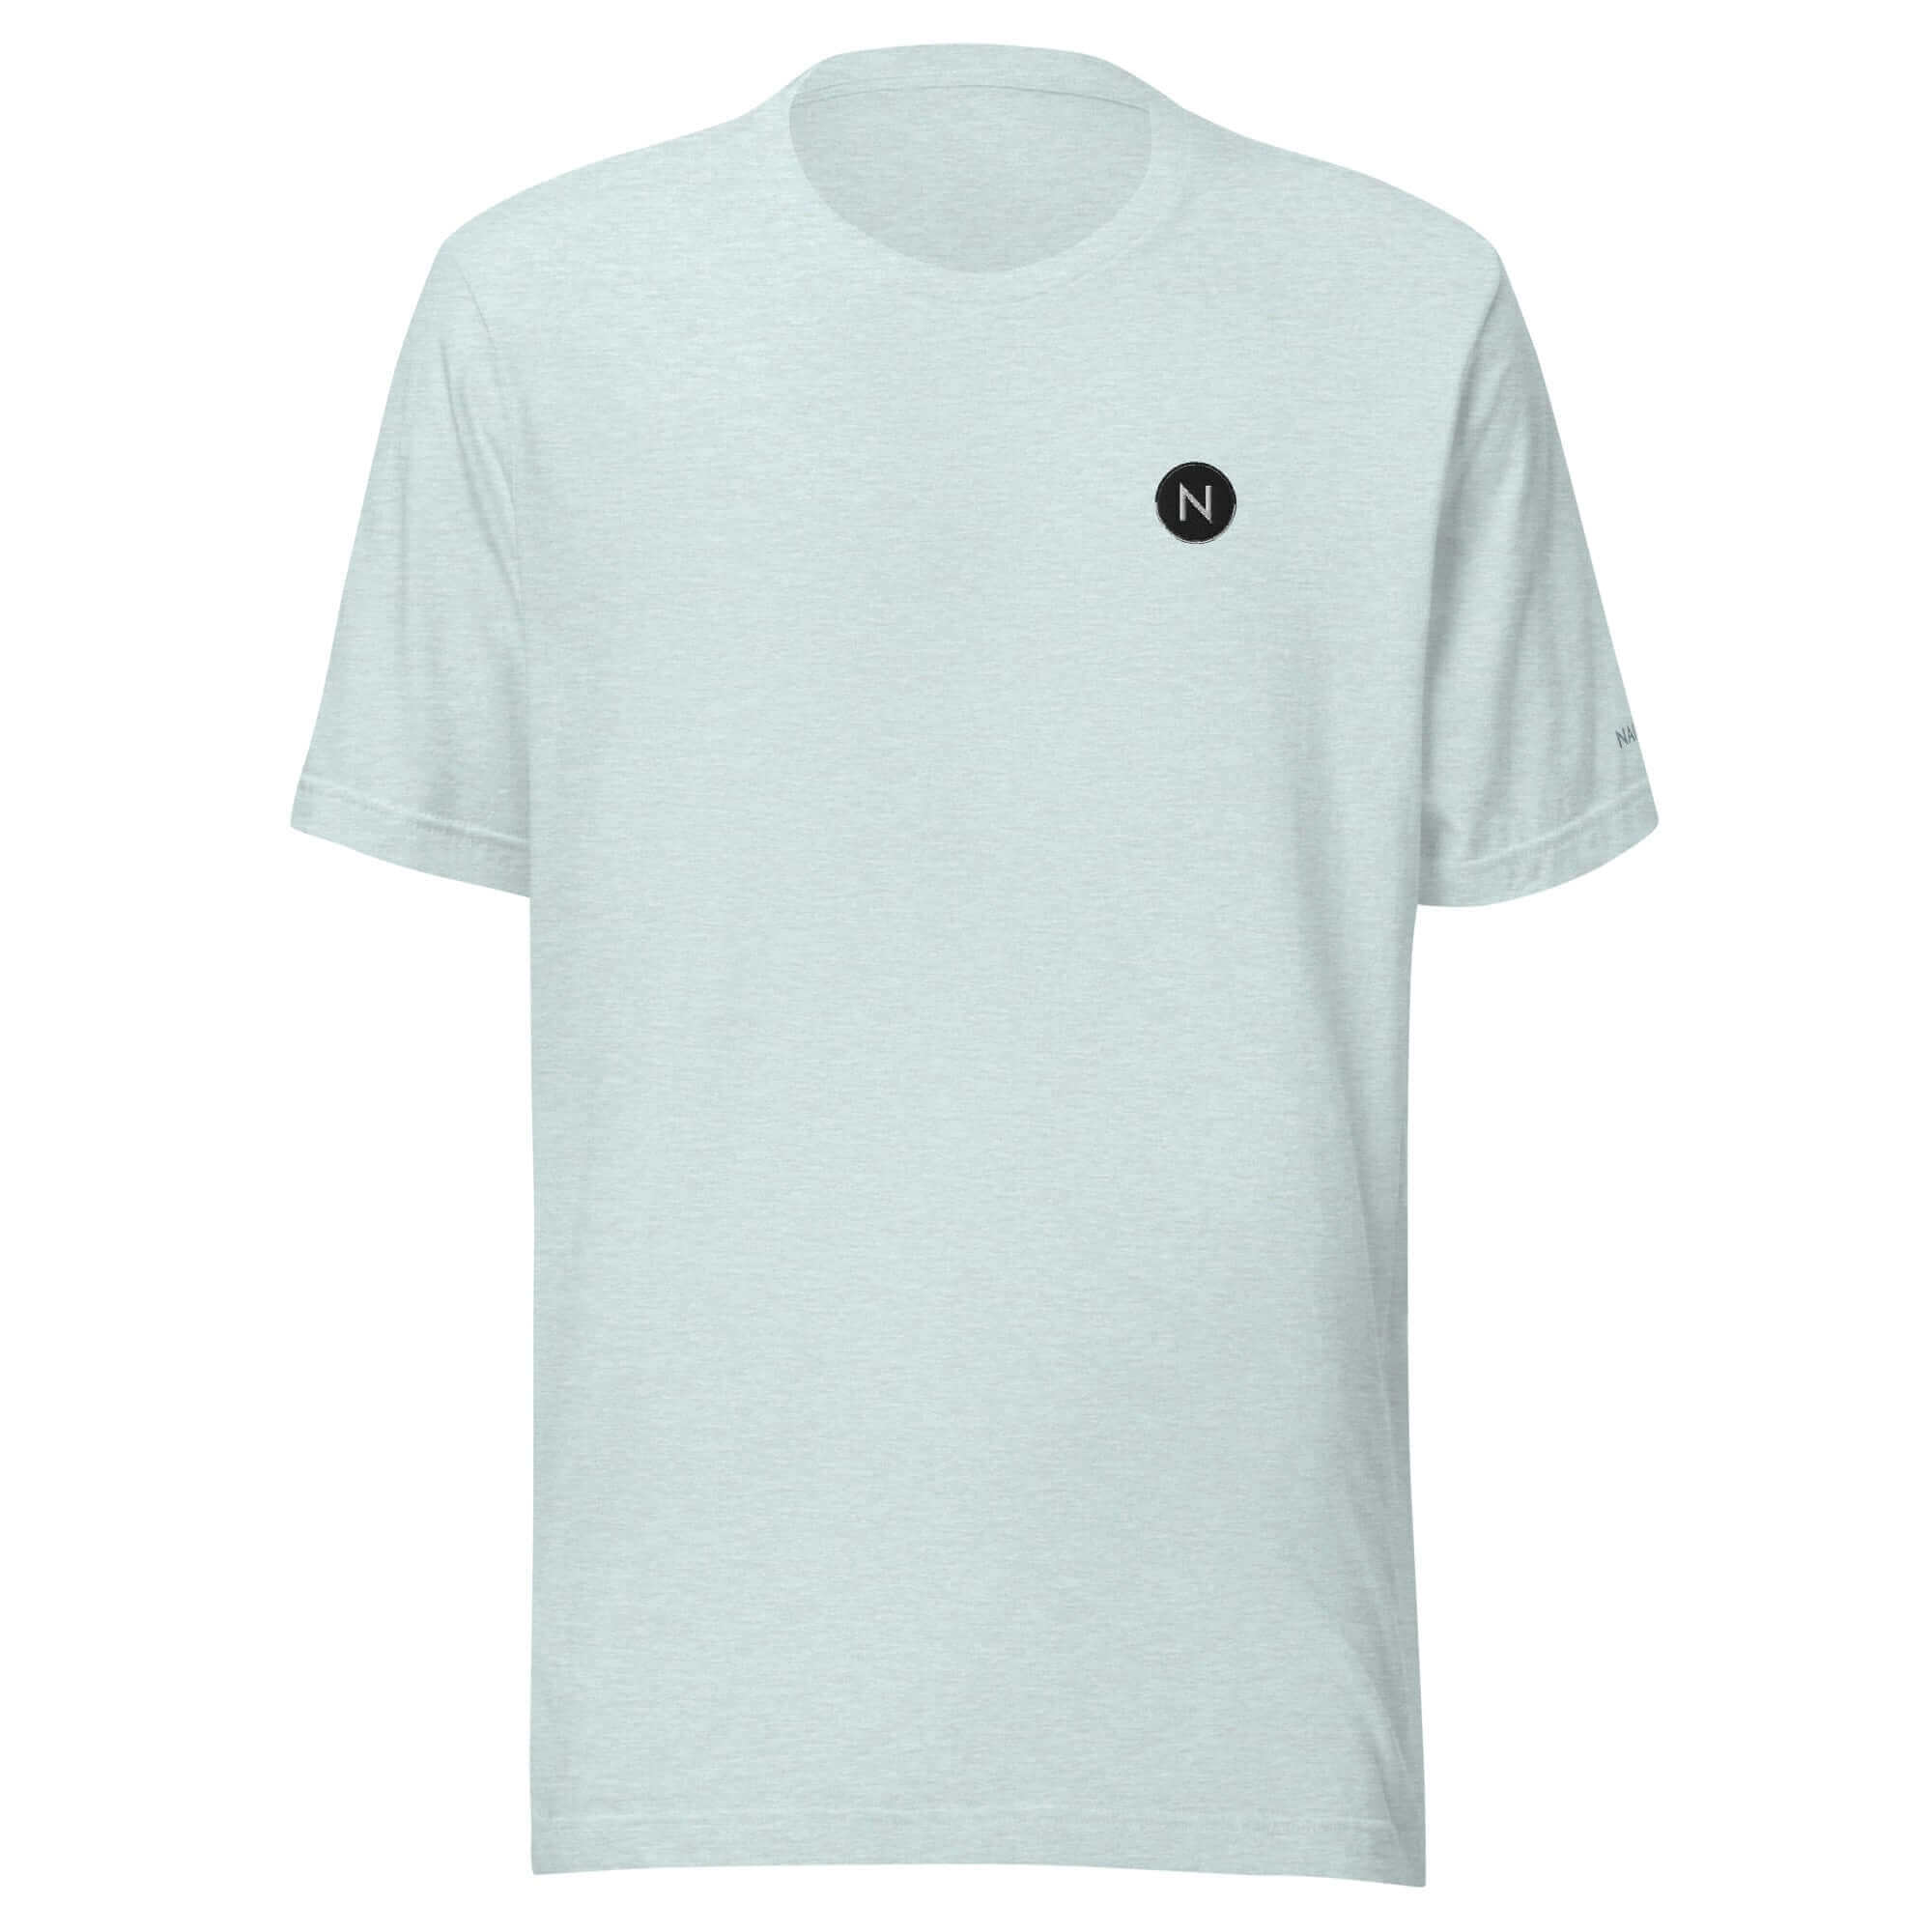 NAILINO Unisex-T-Shirt Farbe: Heather Prisma EisblauGröße: XS